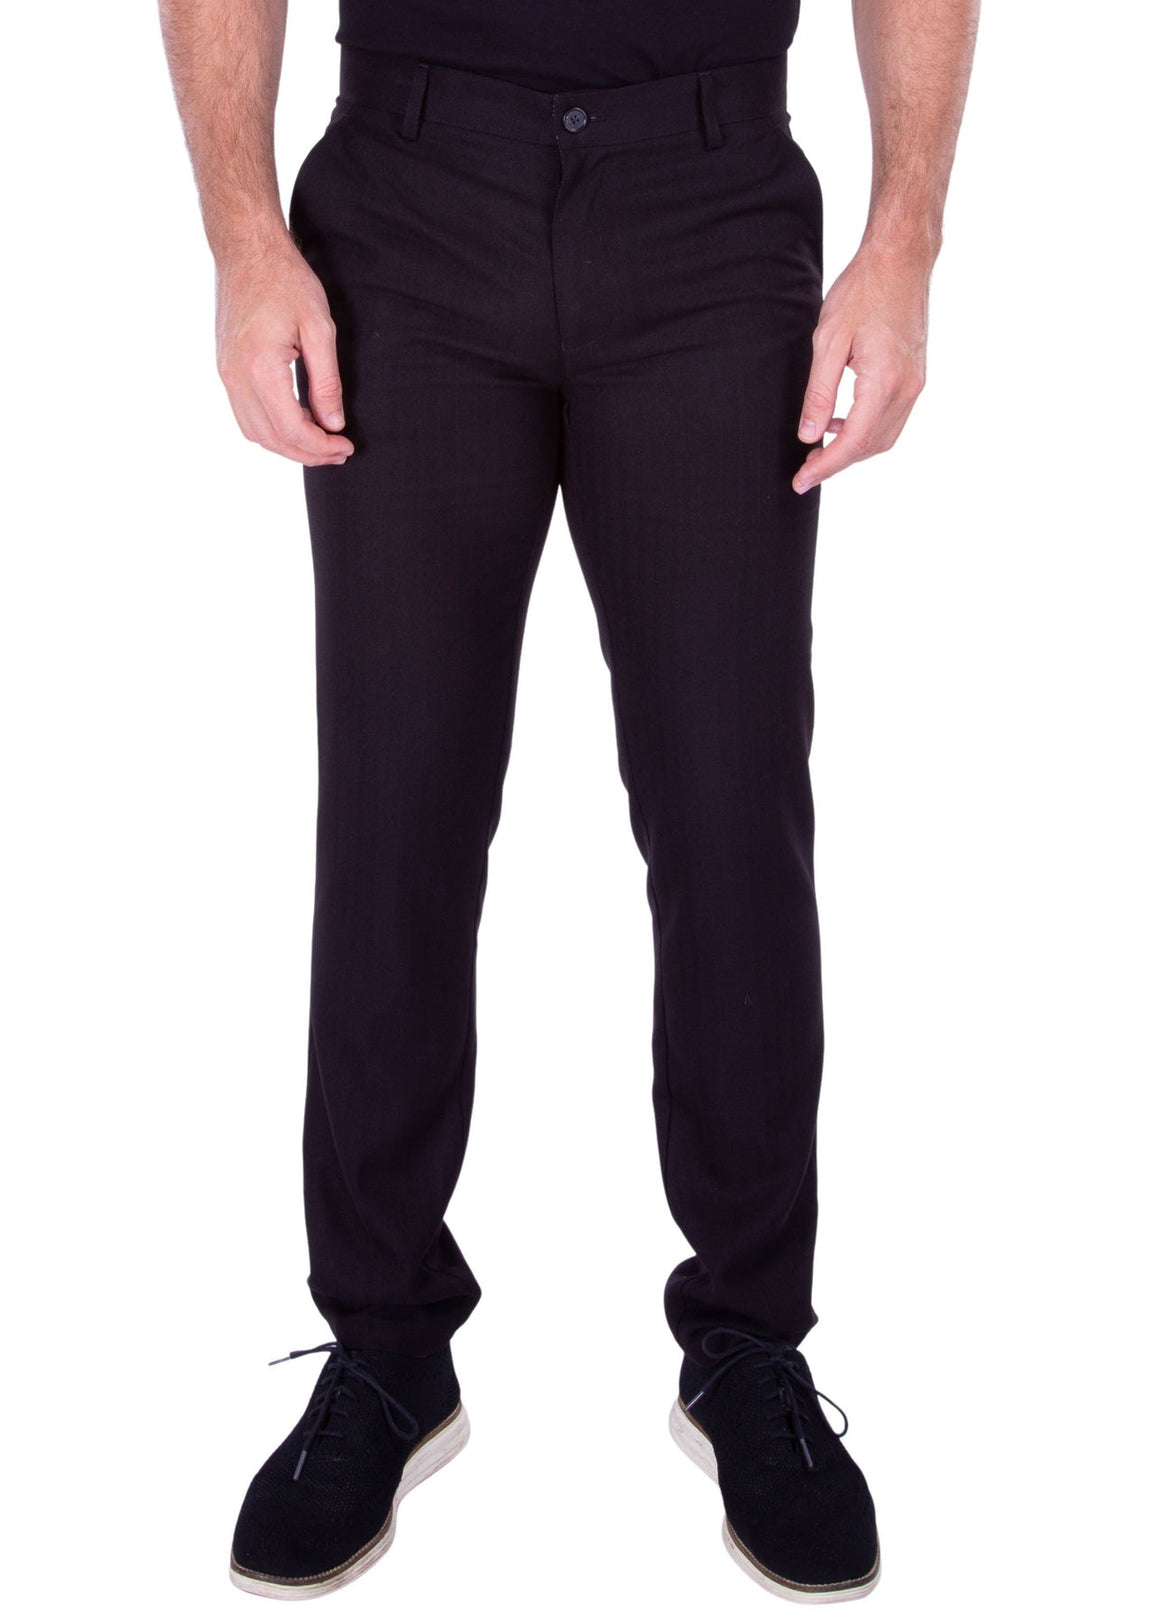 Men's Black Dress Pants Modern Fit European Design | 213118